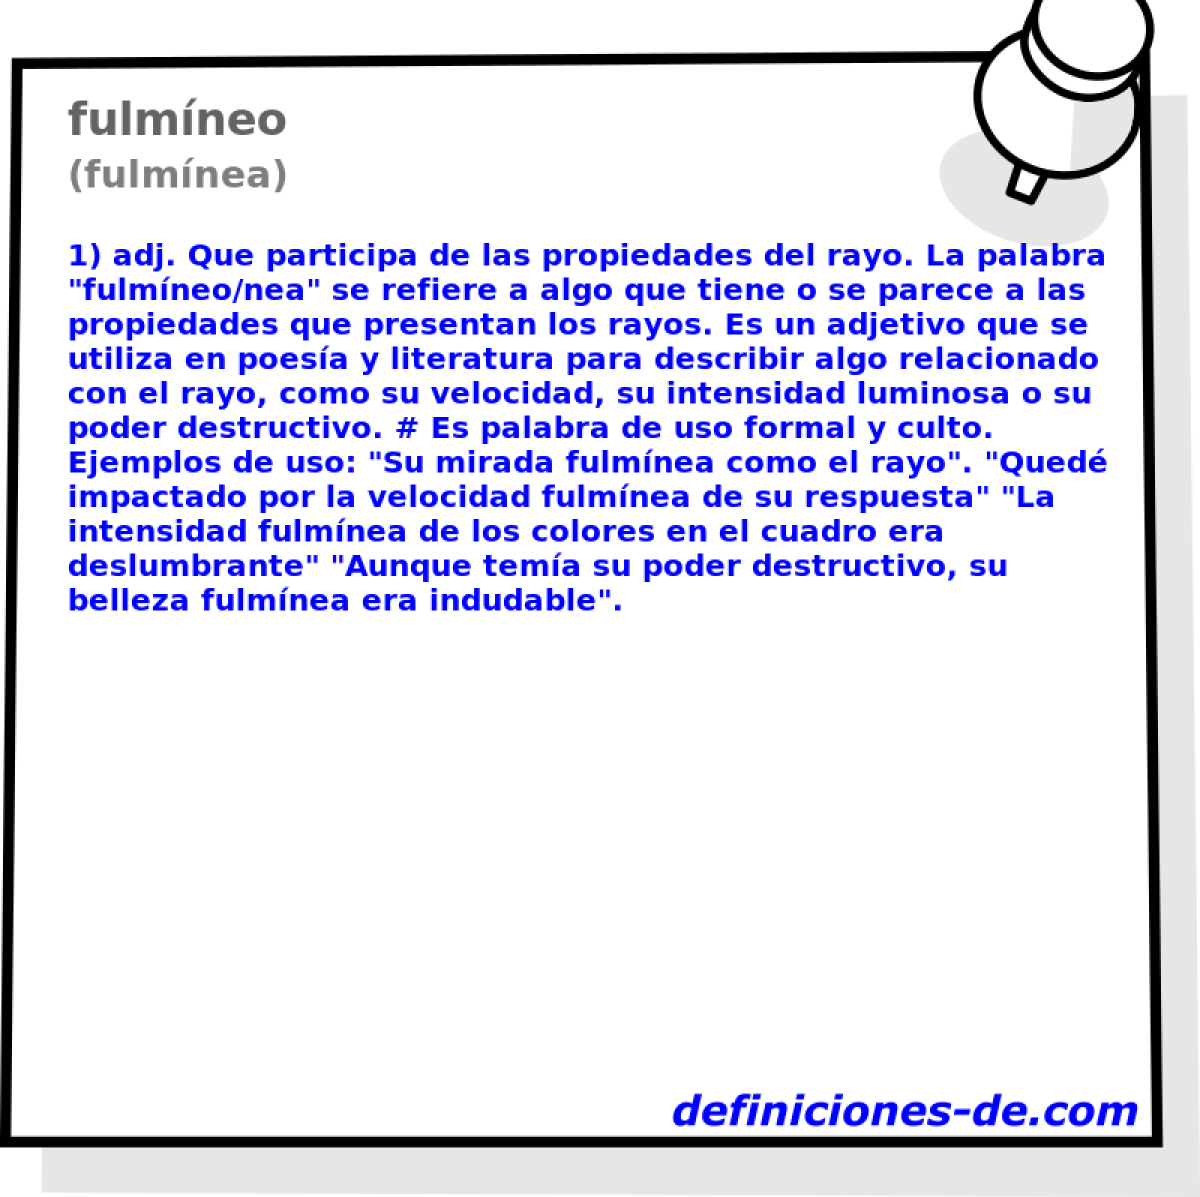 fulmneo (fulmnea)